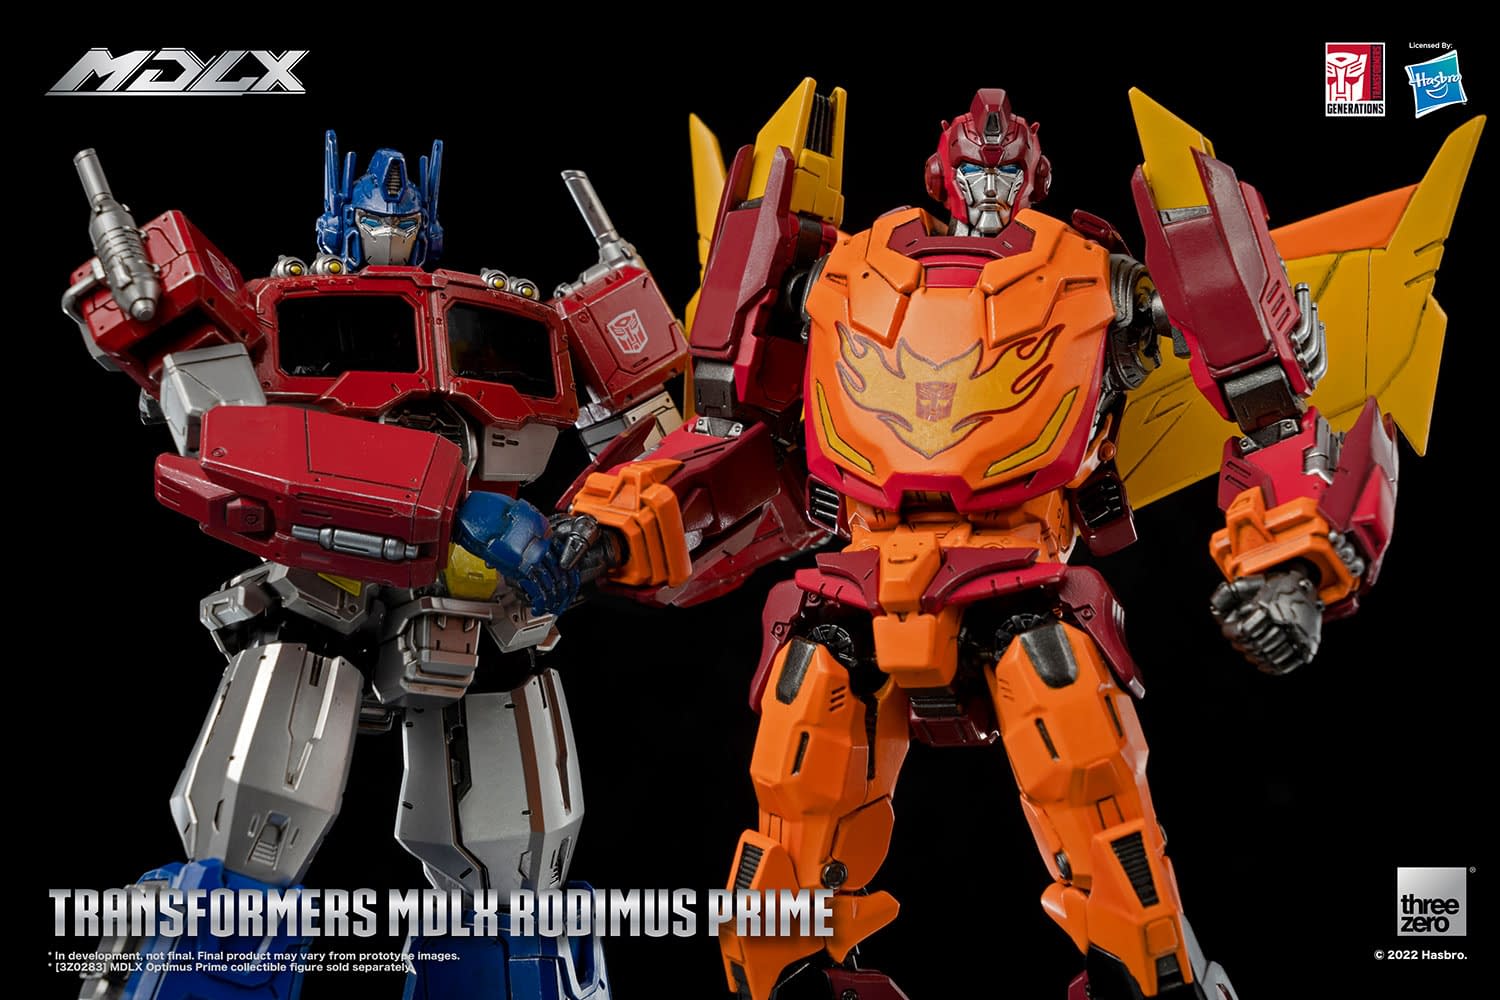 Rodimus Prime Joins threezero's Mighty MDLX Transformers Series